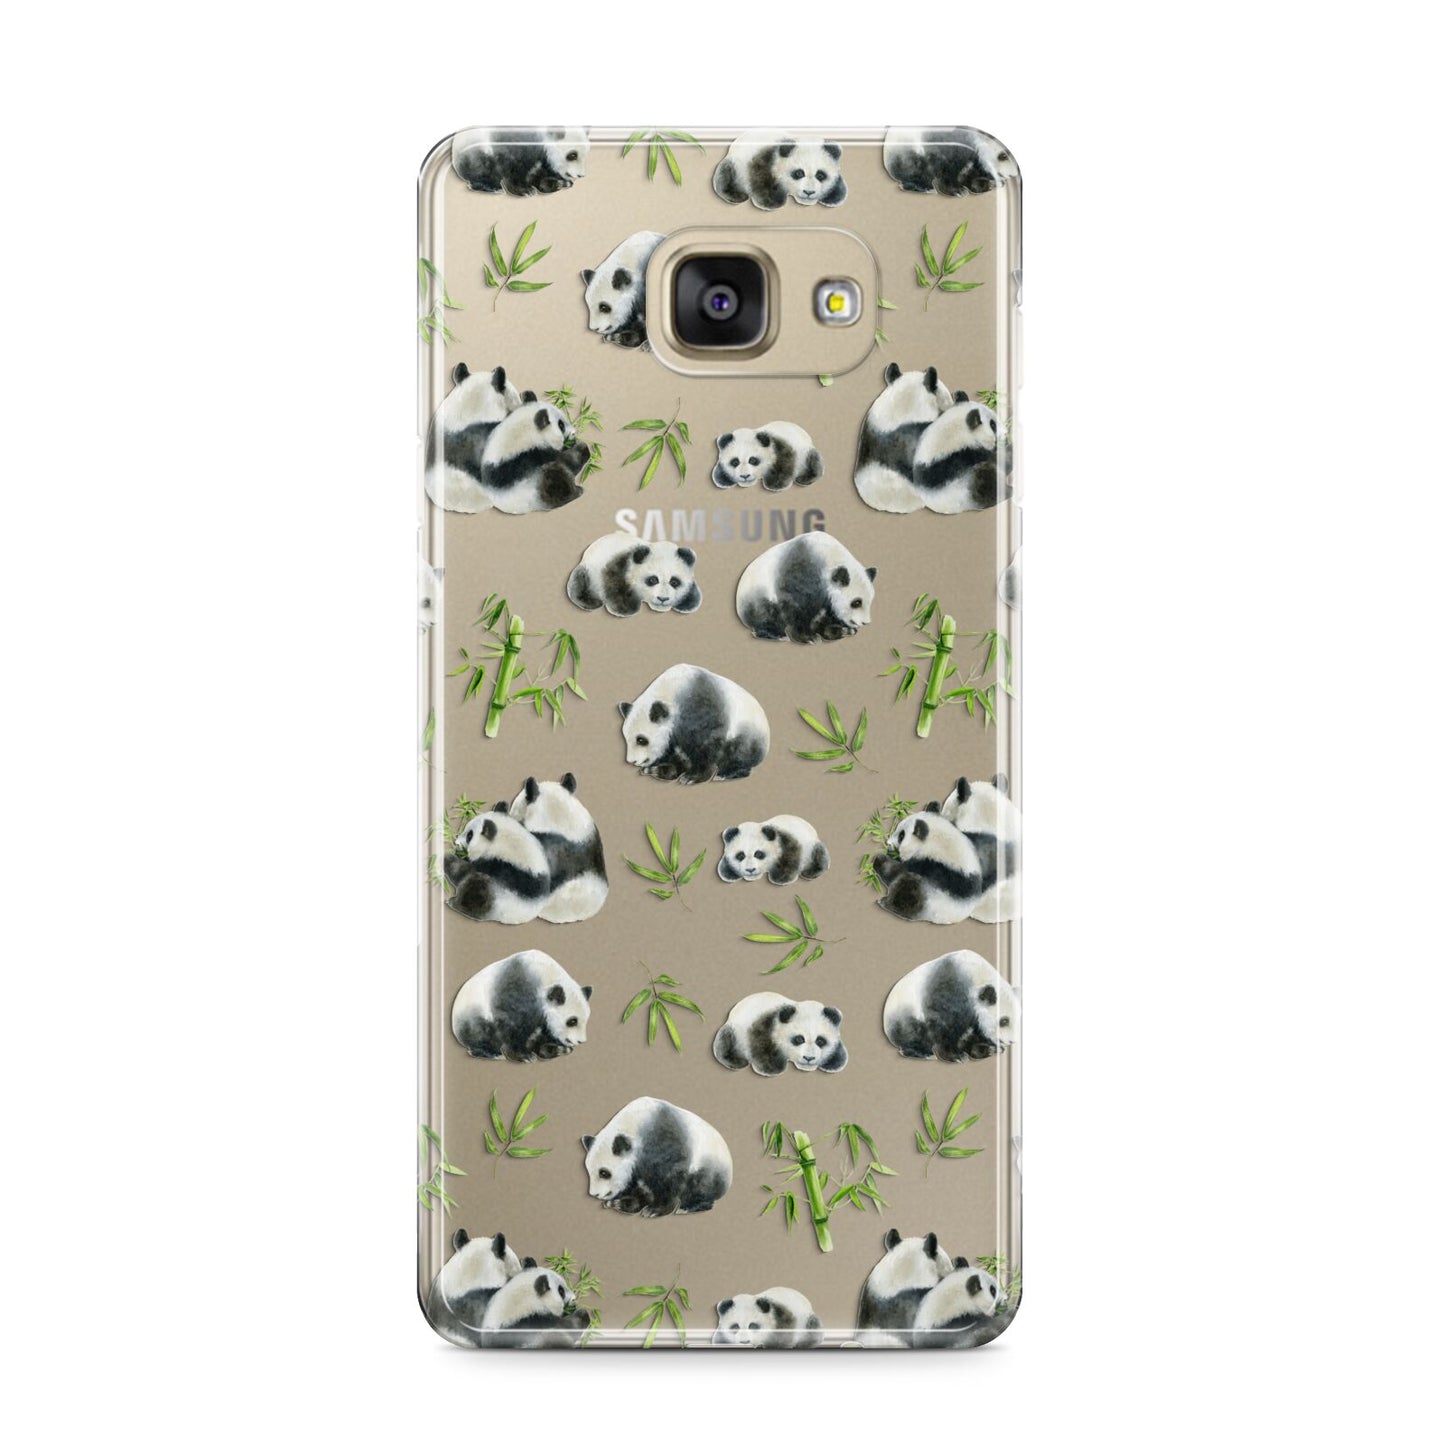 Panda Samsung Galaxy A9 2016 Case on gold phone